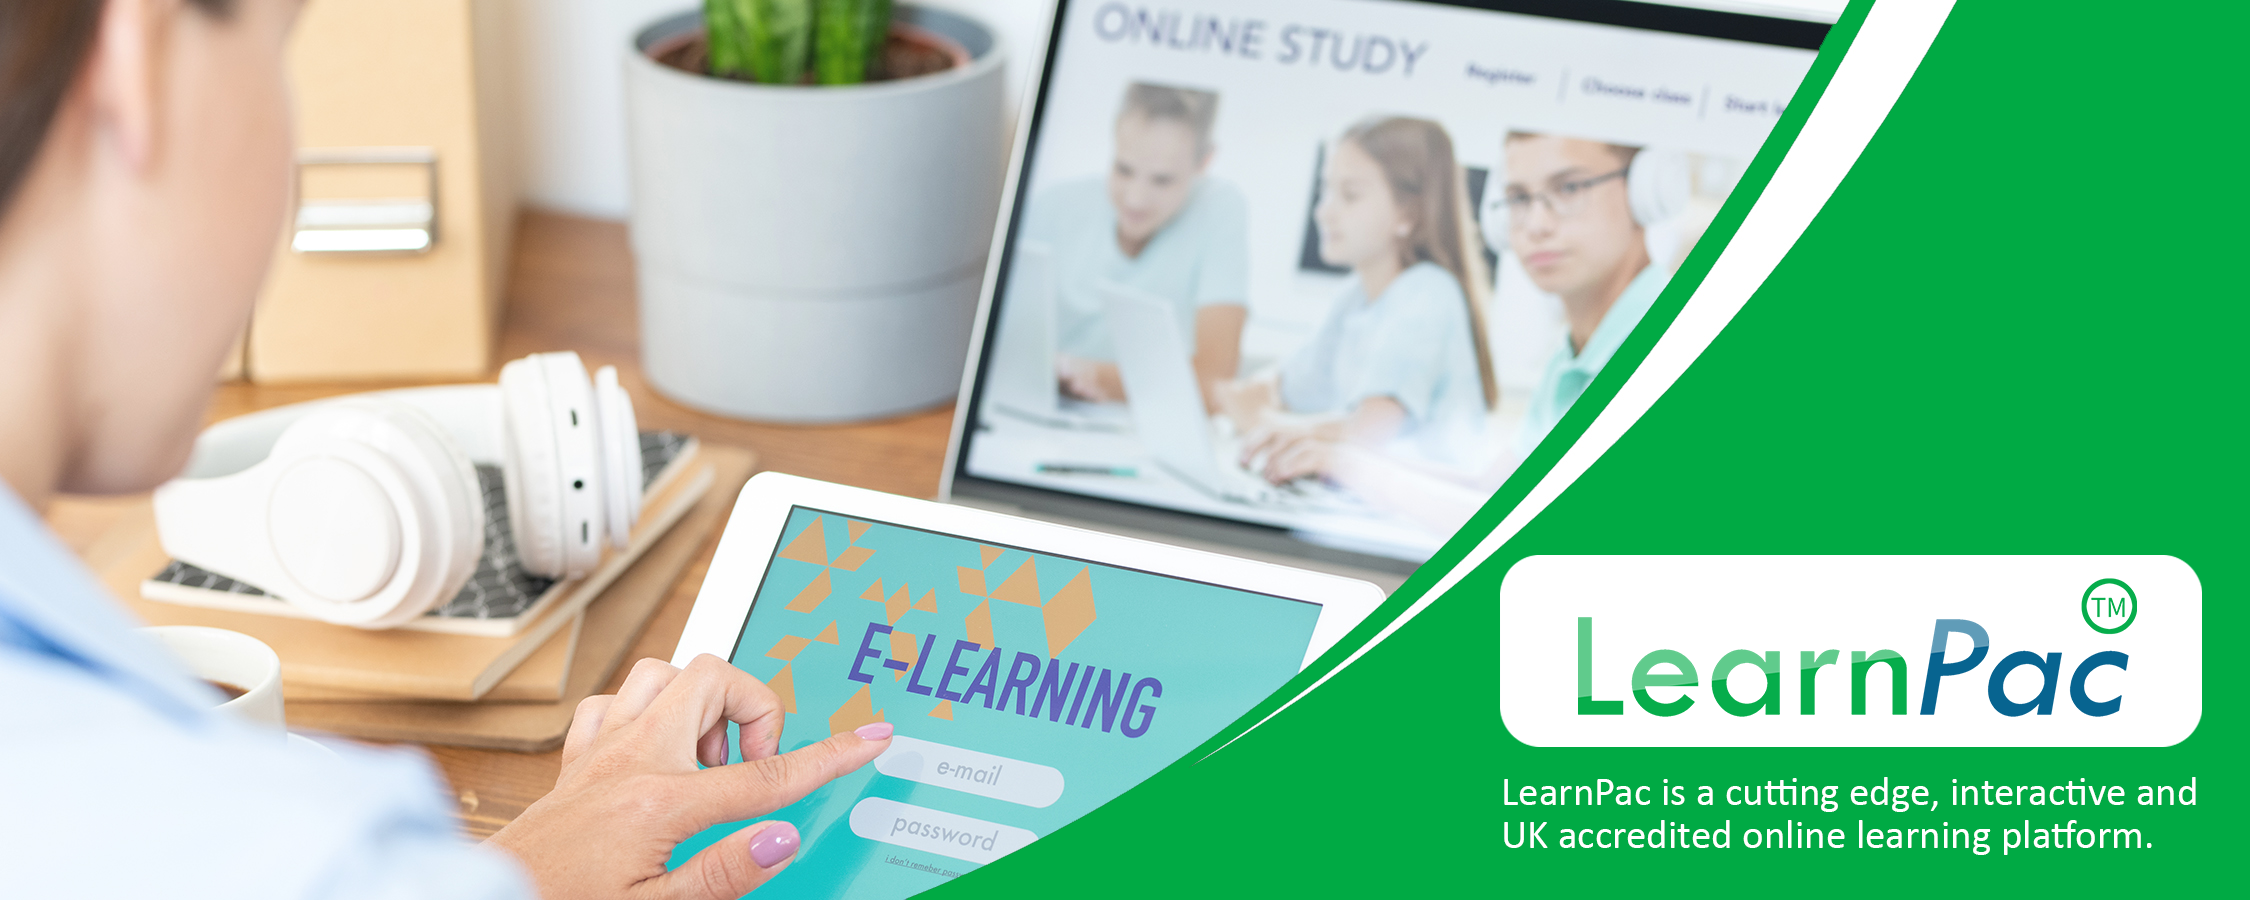 Communication Strategies Training - Online Learning Courses - E-Learning Courses - LearnPac Systems UK -